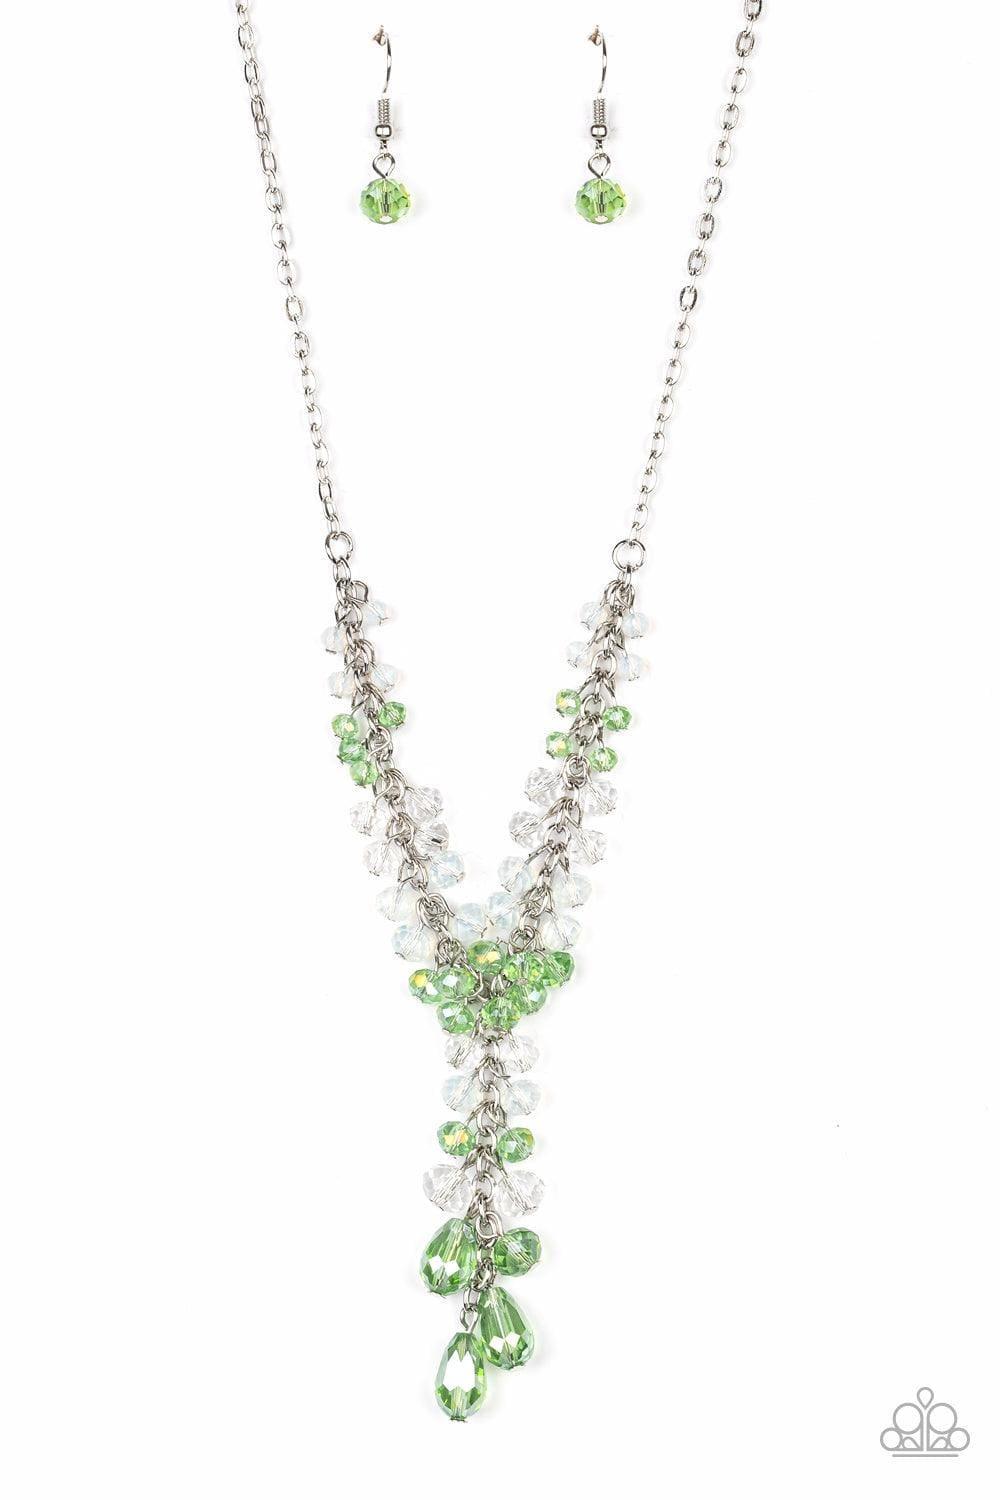 Paparazzi Accessories - Iridescent Illumination - Green Necklace - Bling by JessieK